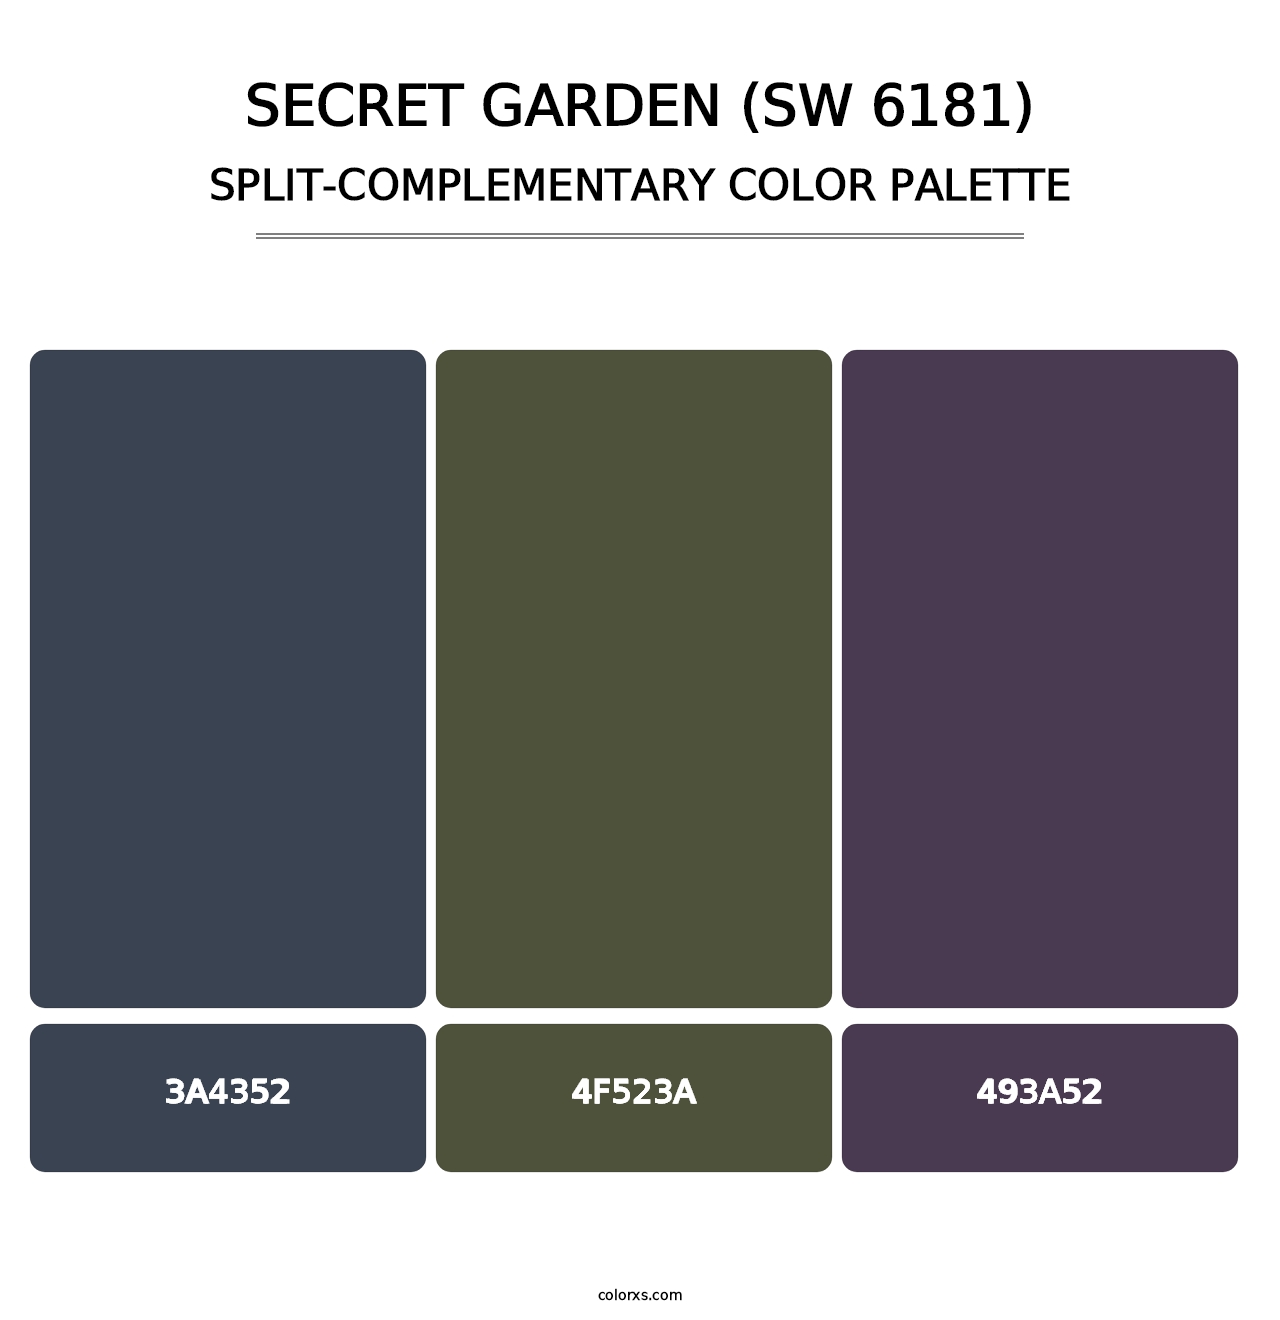 Secret Garden (SW 6181) - Split-Complementary Color Palette